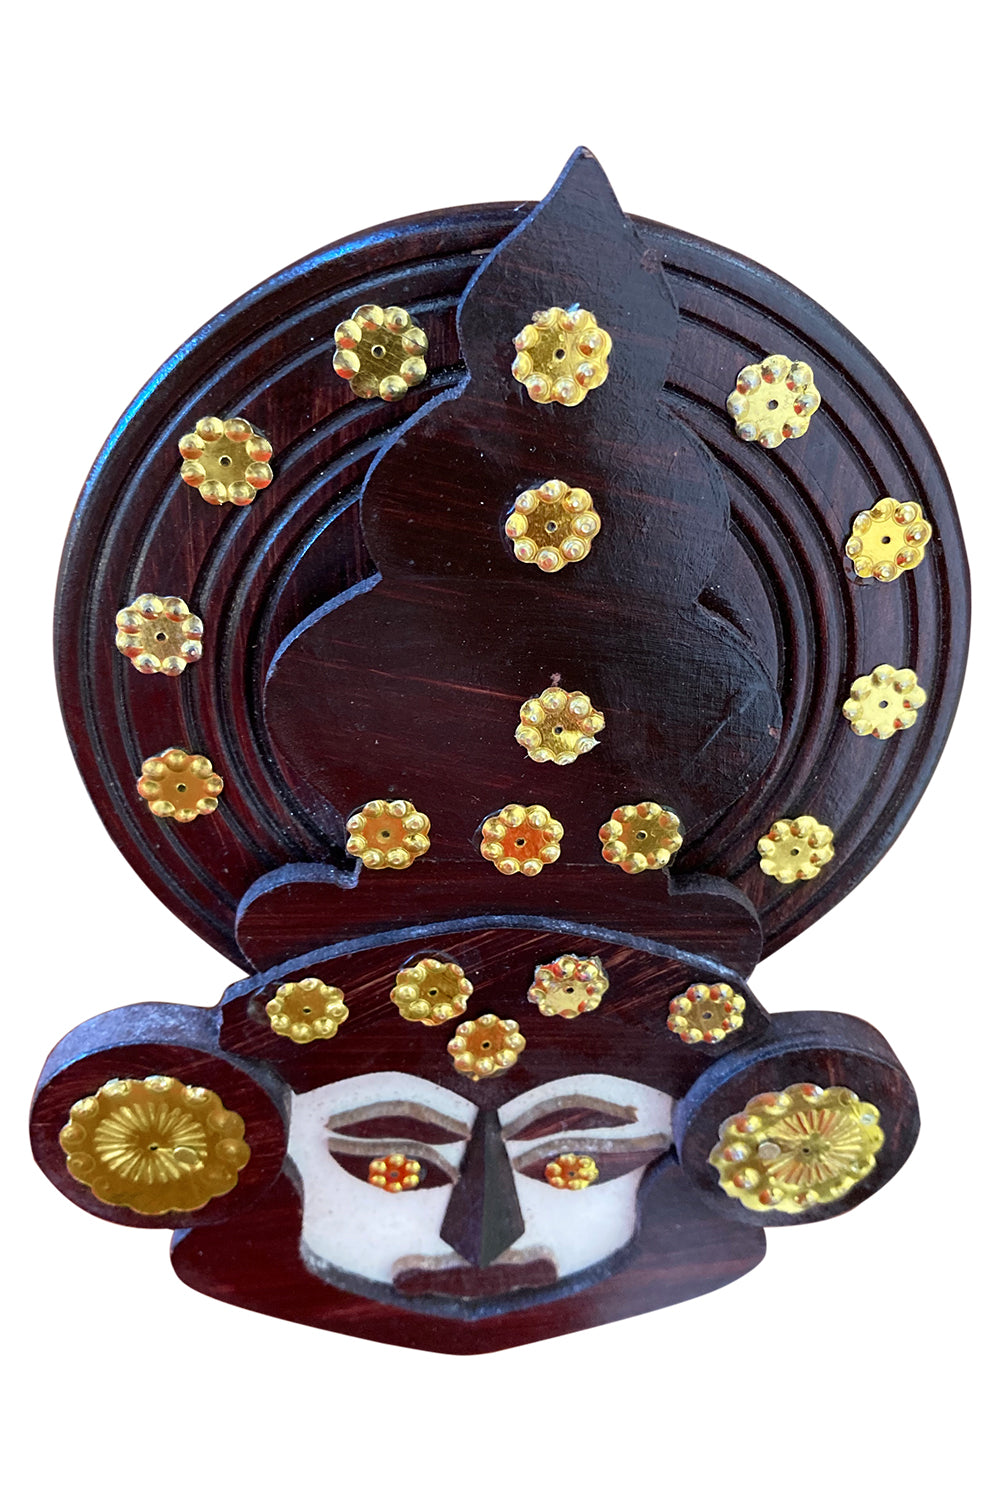 Southloom Handmade Kathakali Face Handicraft (Carved from Mahogany Wood)